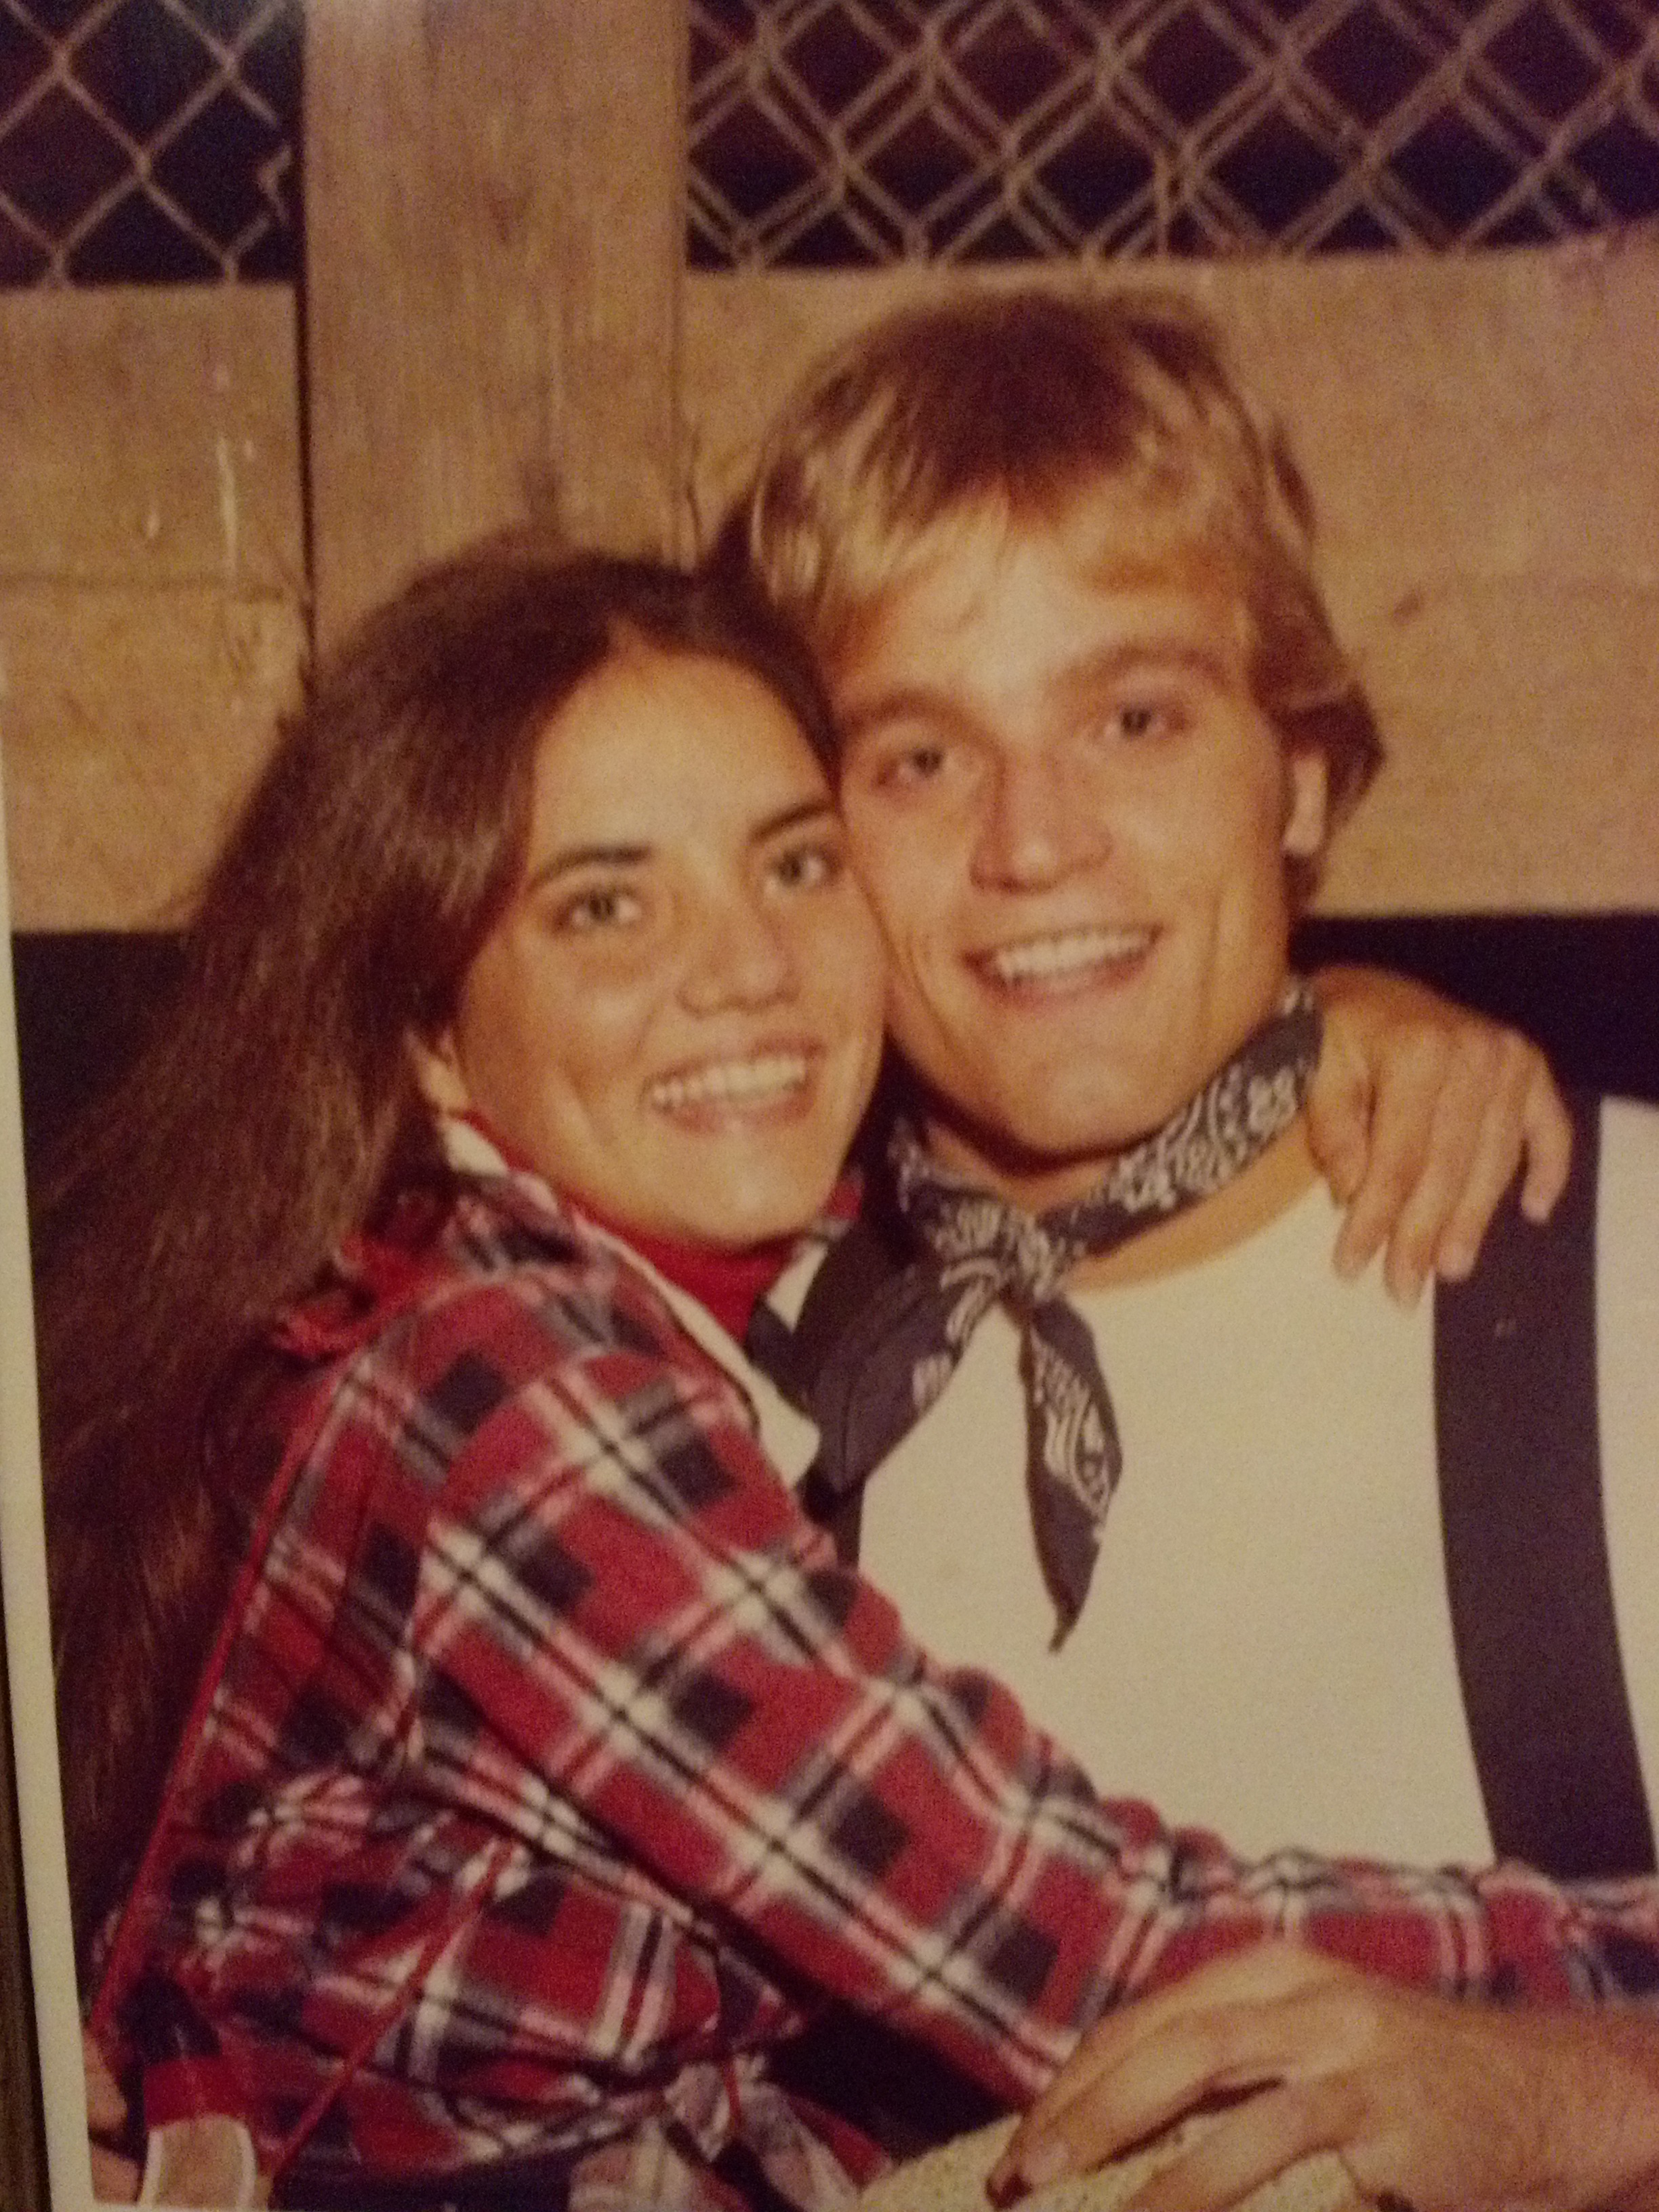 With wife Marsha - Indiana University circa 1978